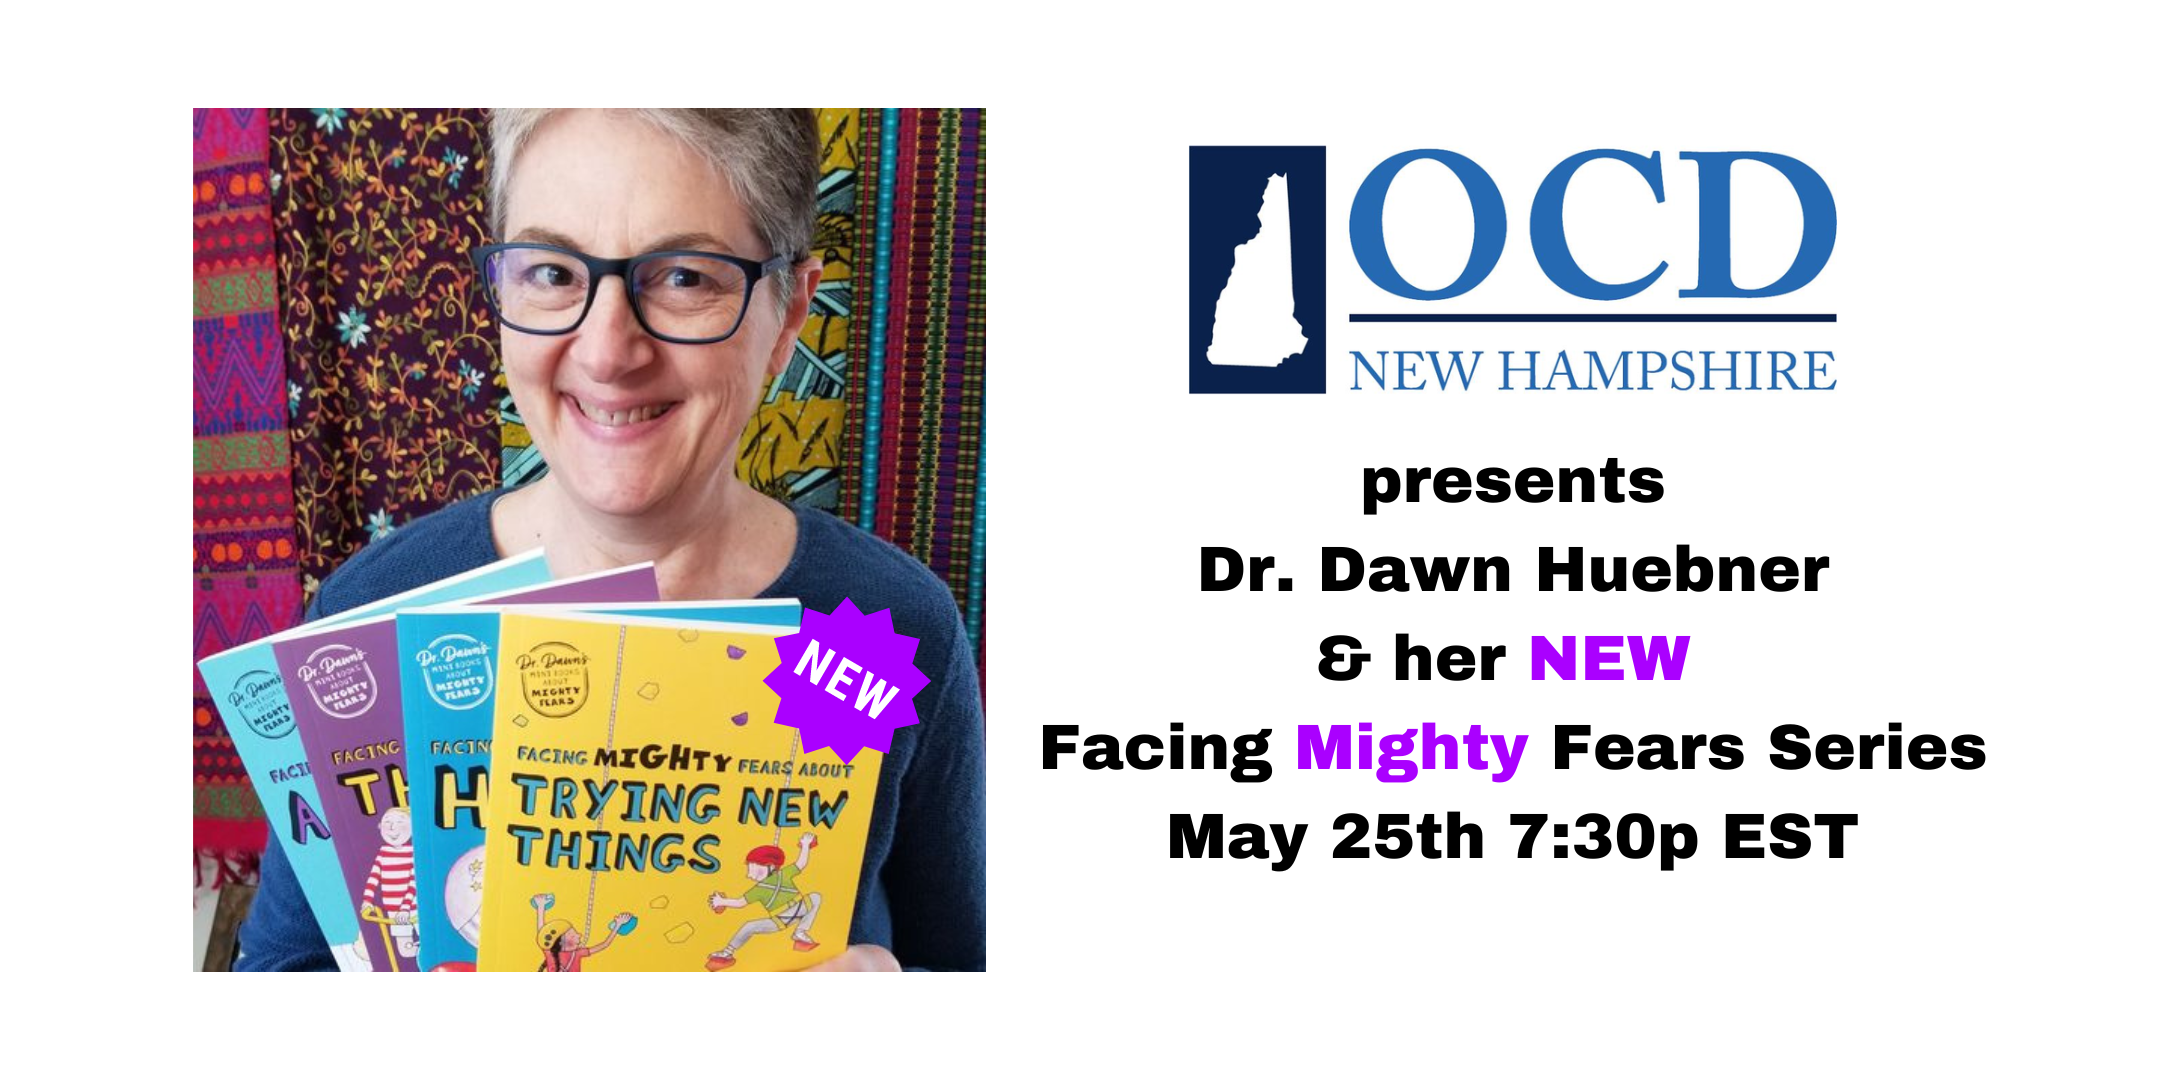 Dr. Dawn Huebner joins us on May 25!